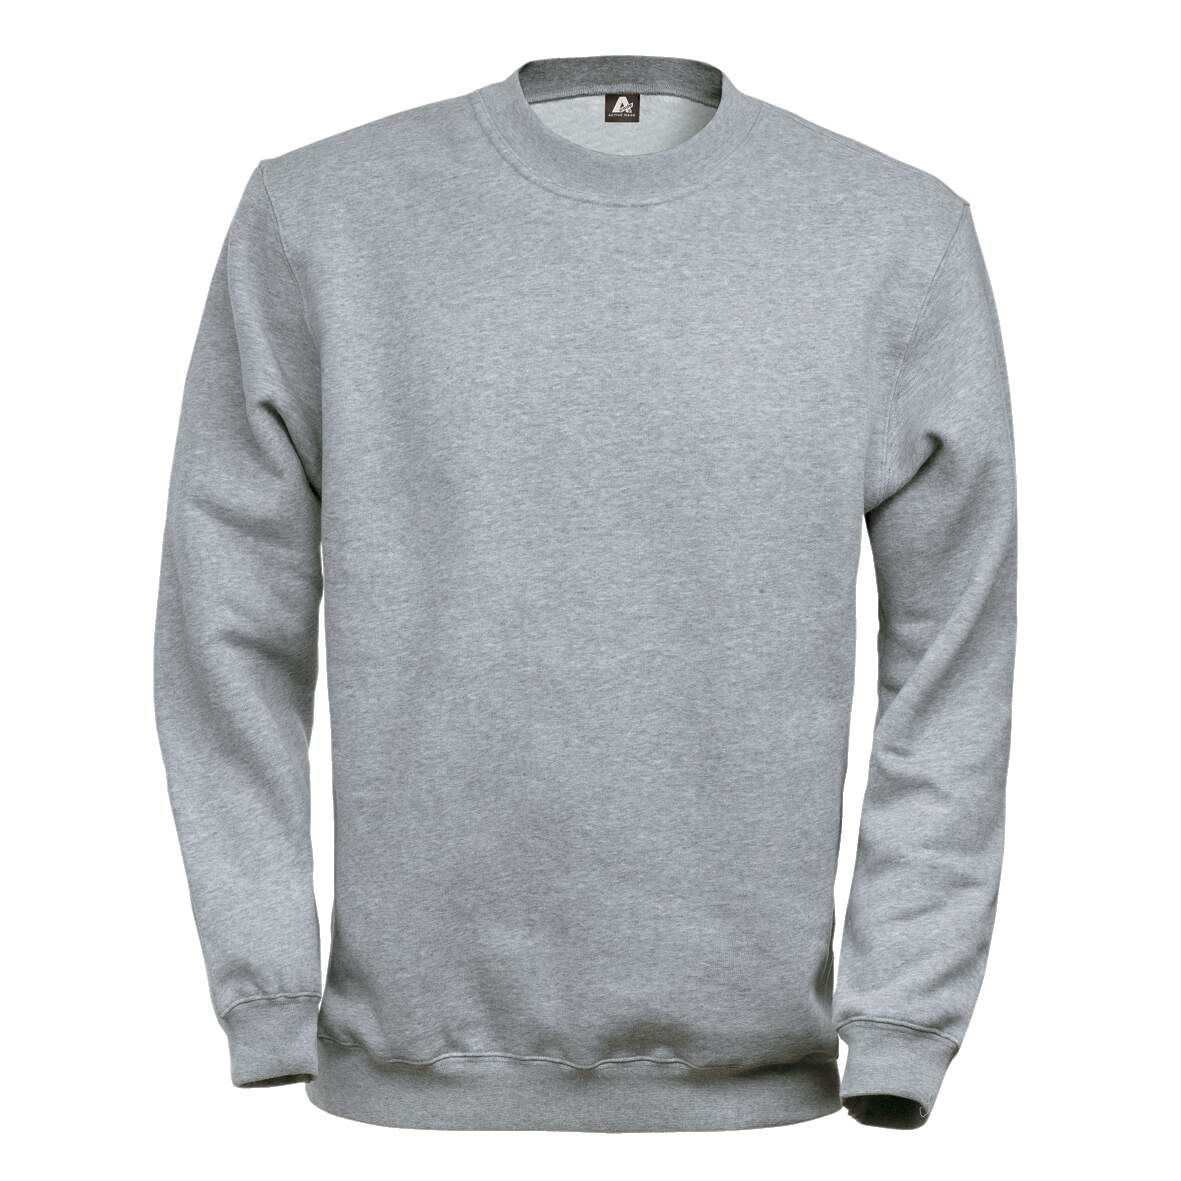 1181271 - Sweatshirt grau meliert 100225